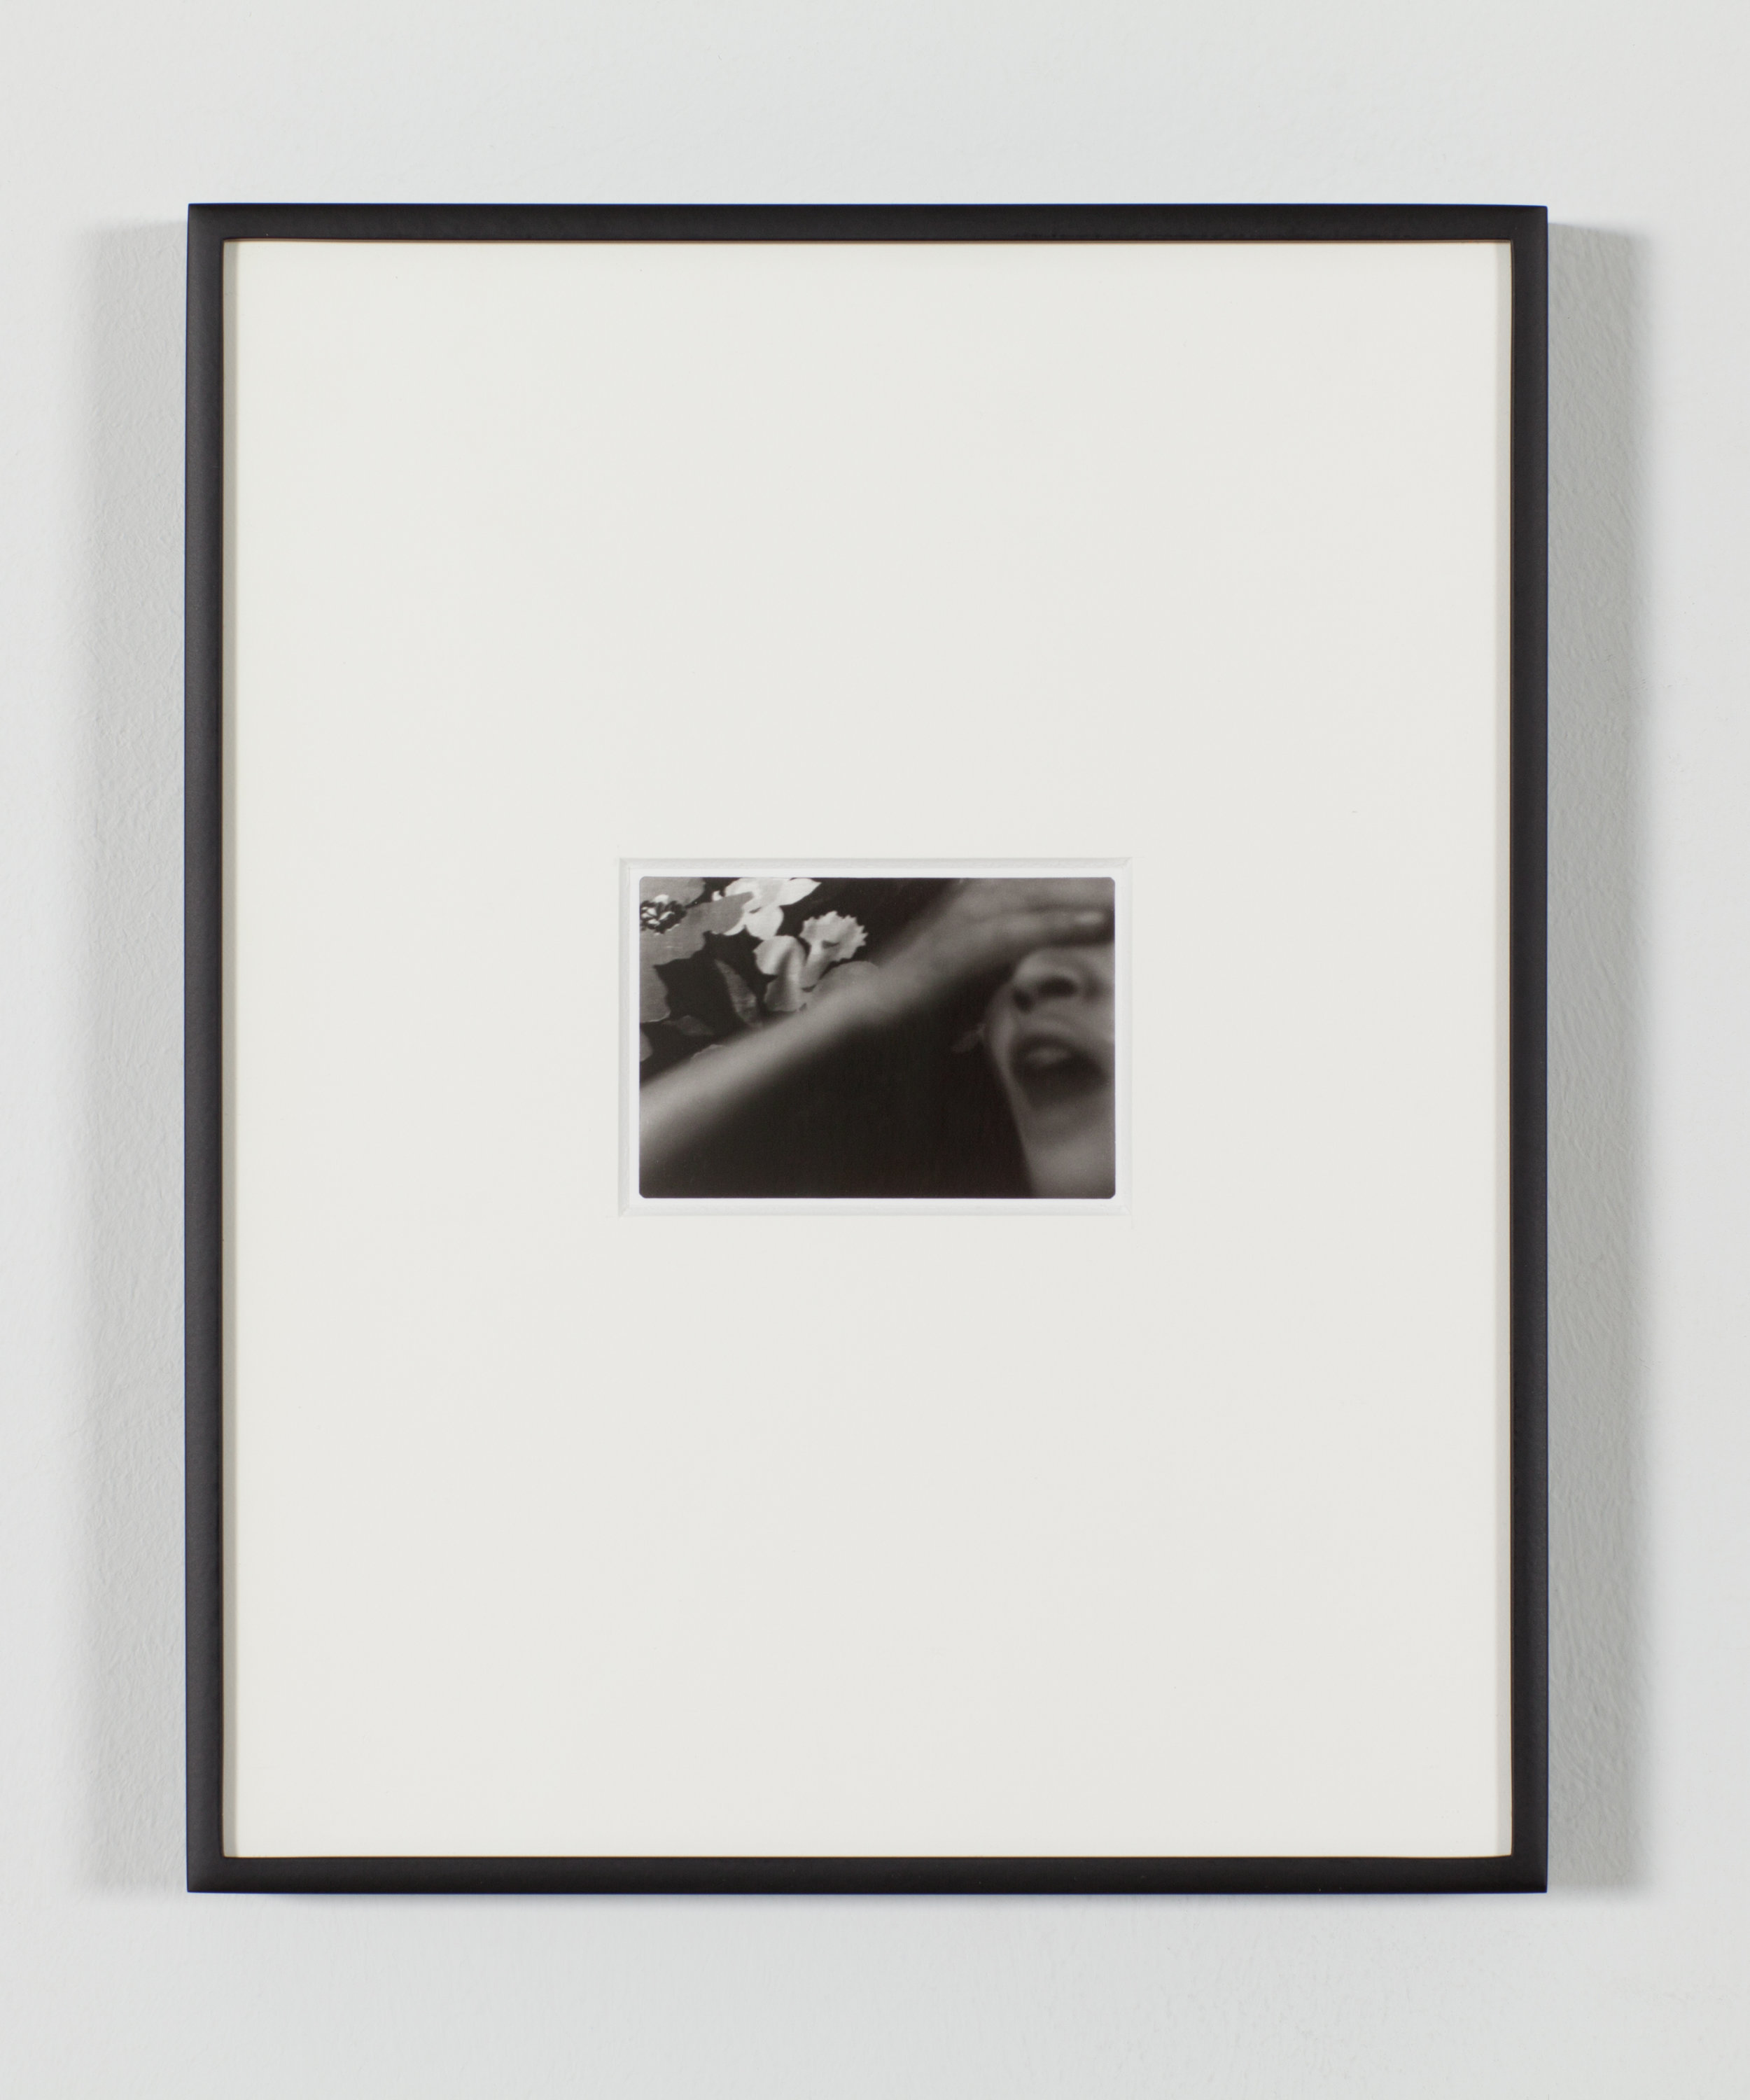  Untitled (Kong), 2019 Gelatin Silver Print 2.7x1.8" in 8x10" Aluminum Frame 